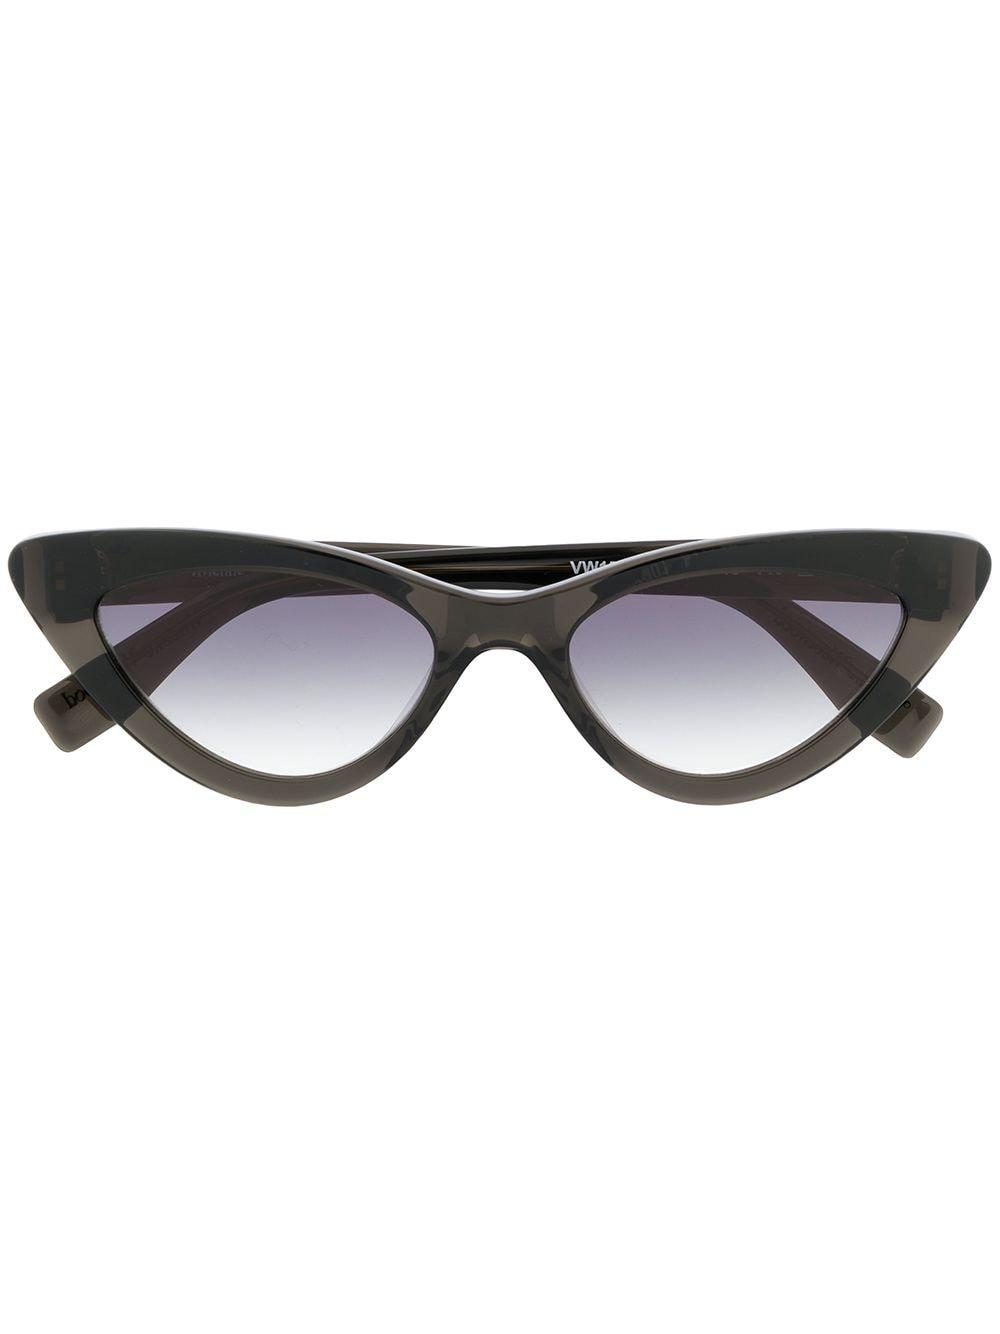 Vivienne Westwood Cat-eye Sunglasses in Gray | Lyst